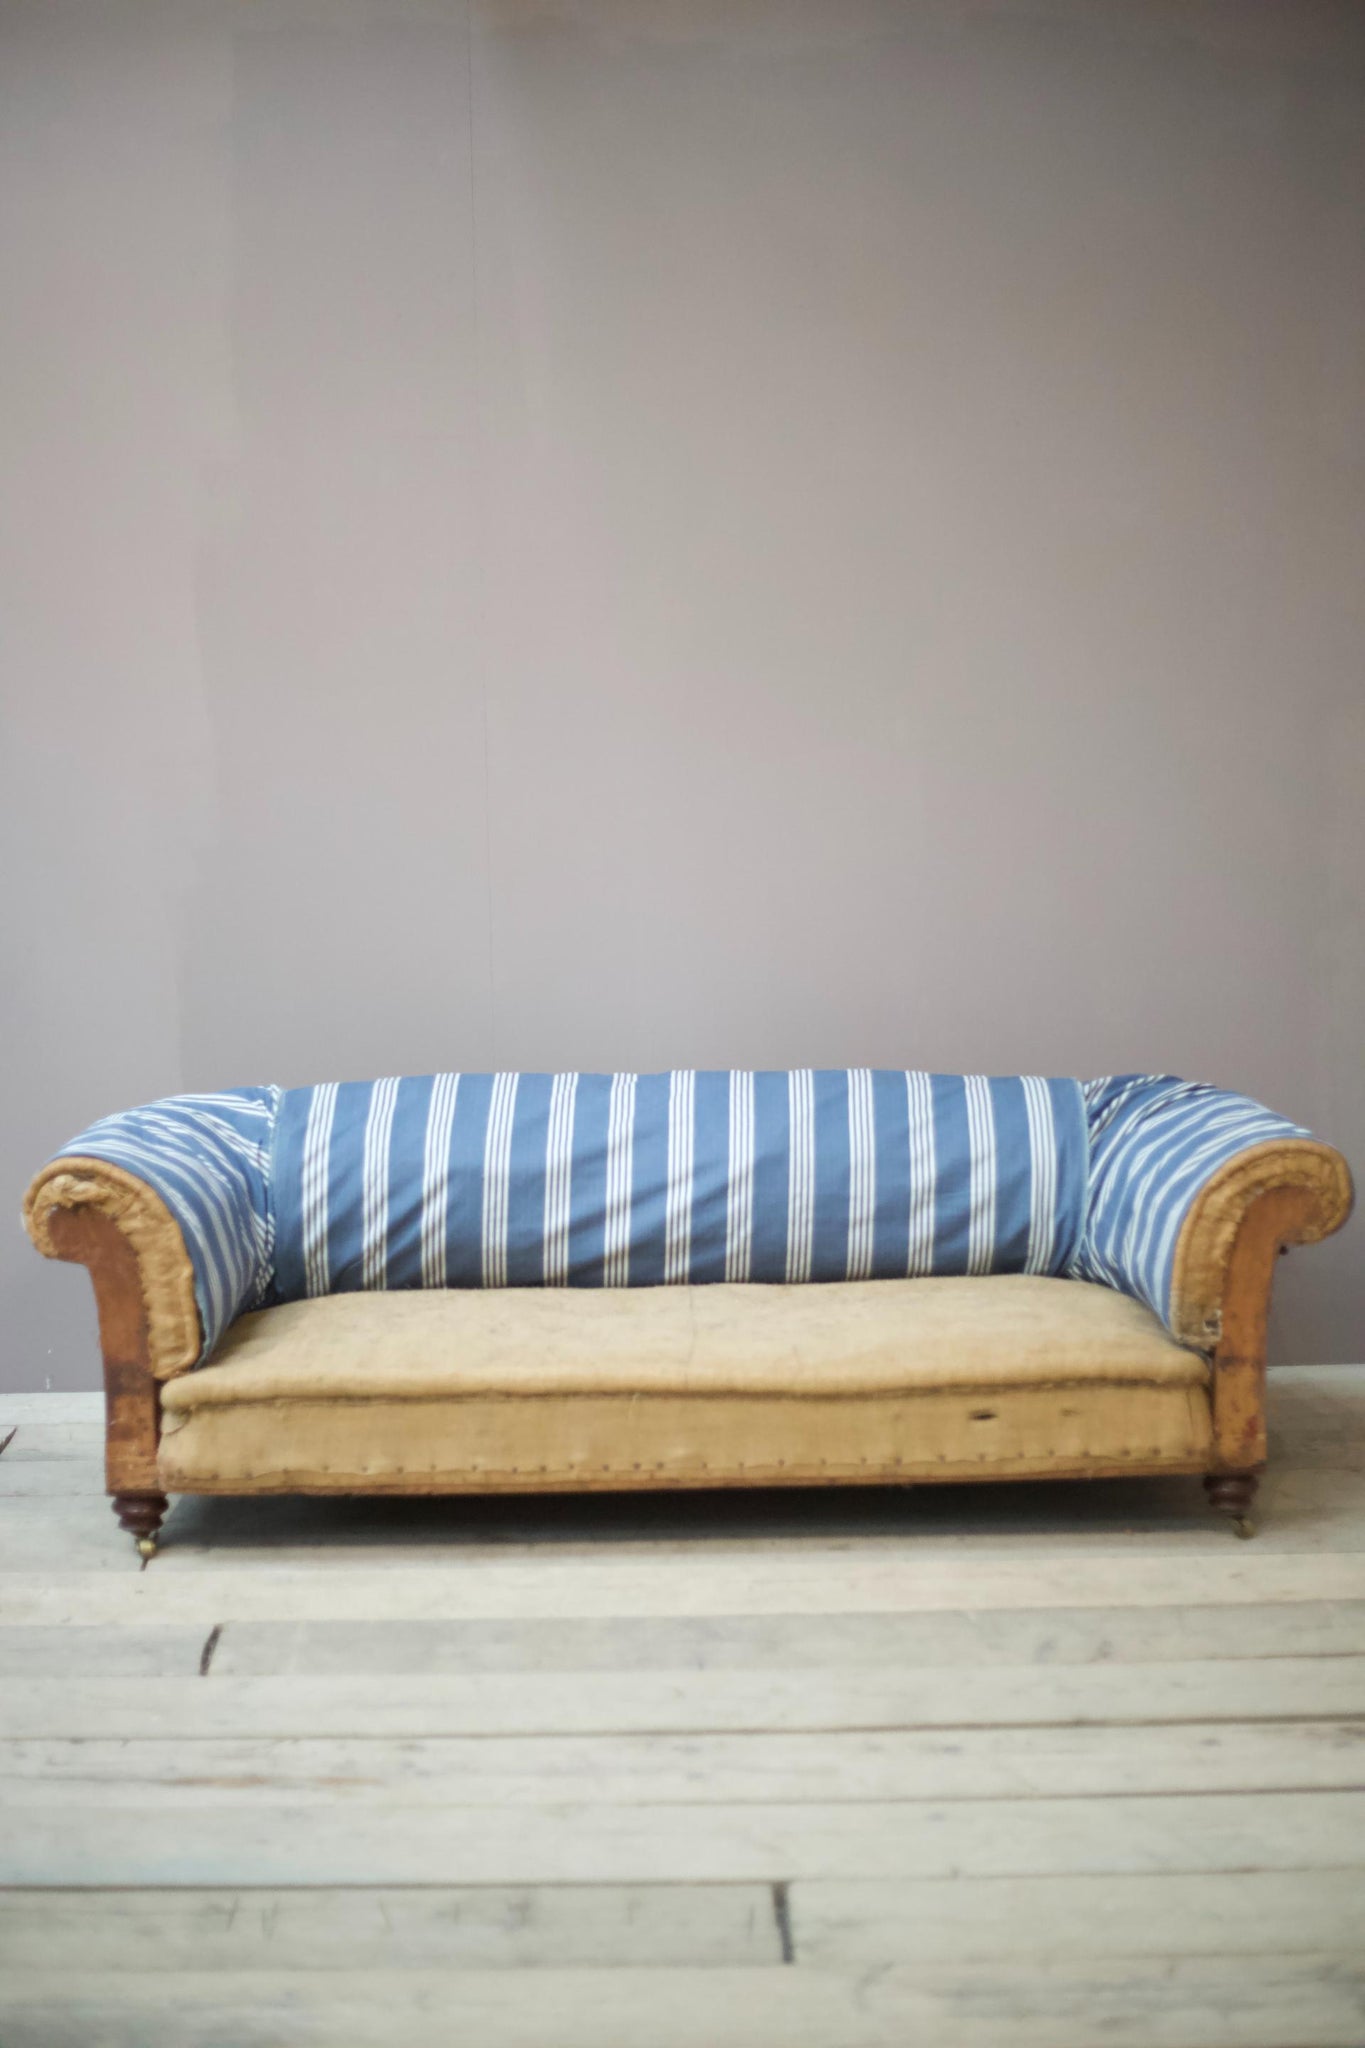 19th century English chesterfield sofa by Cornelius V Smith